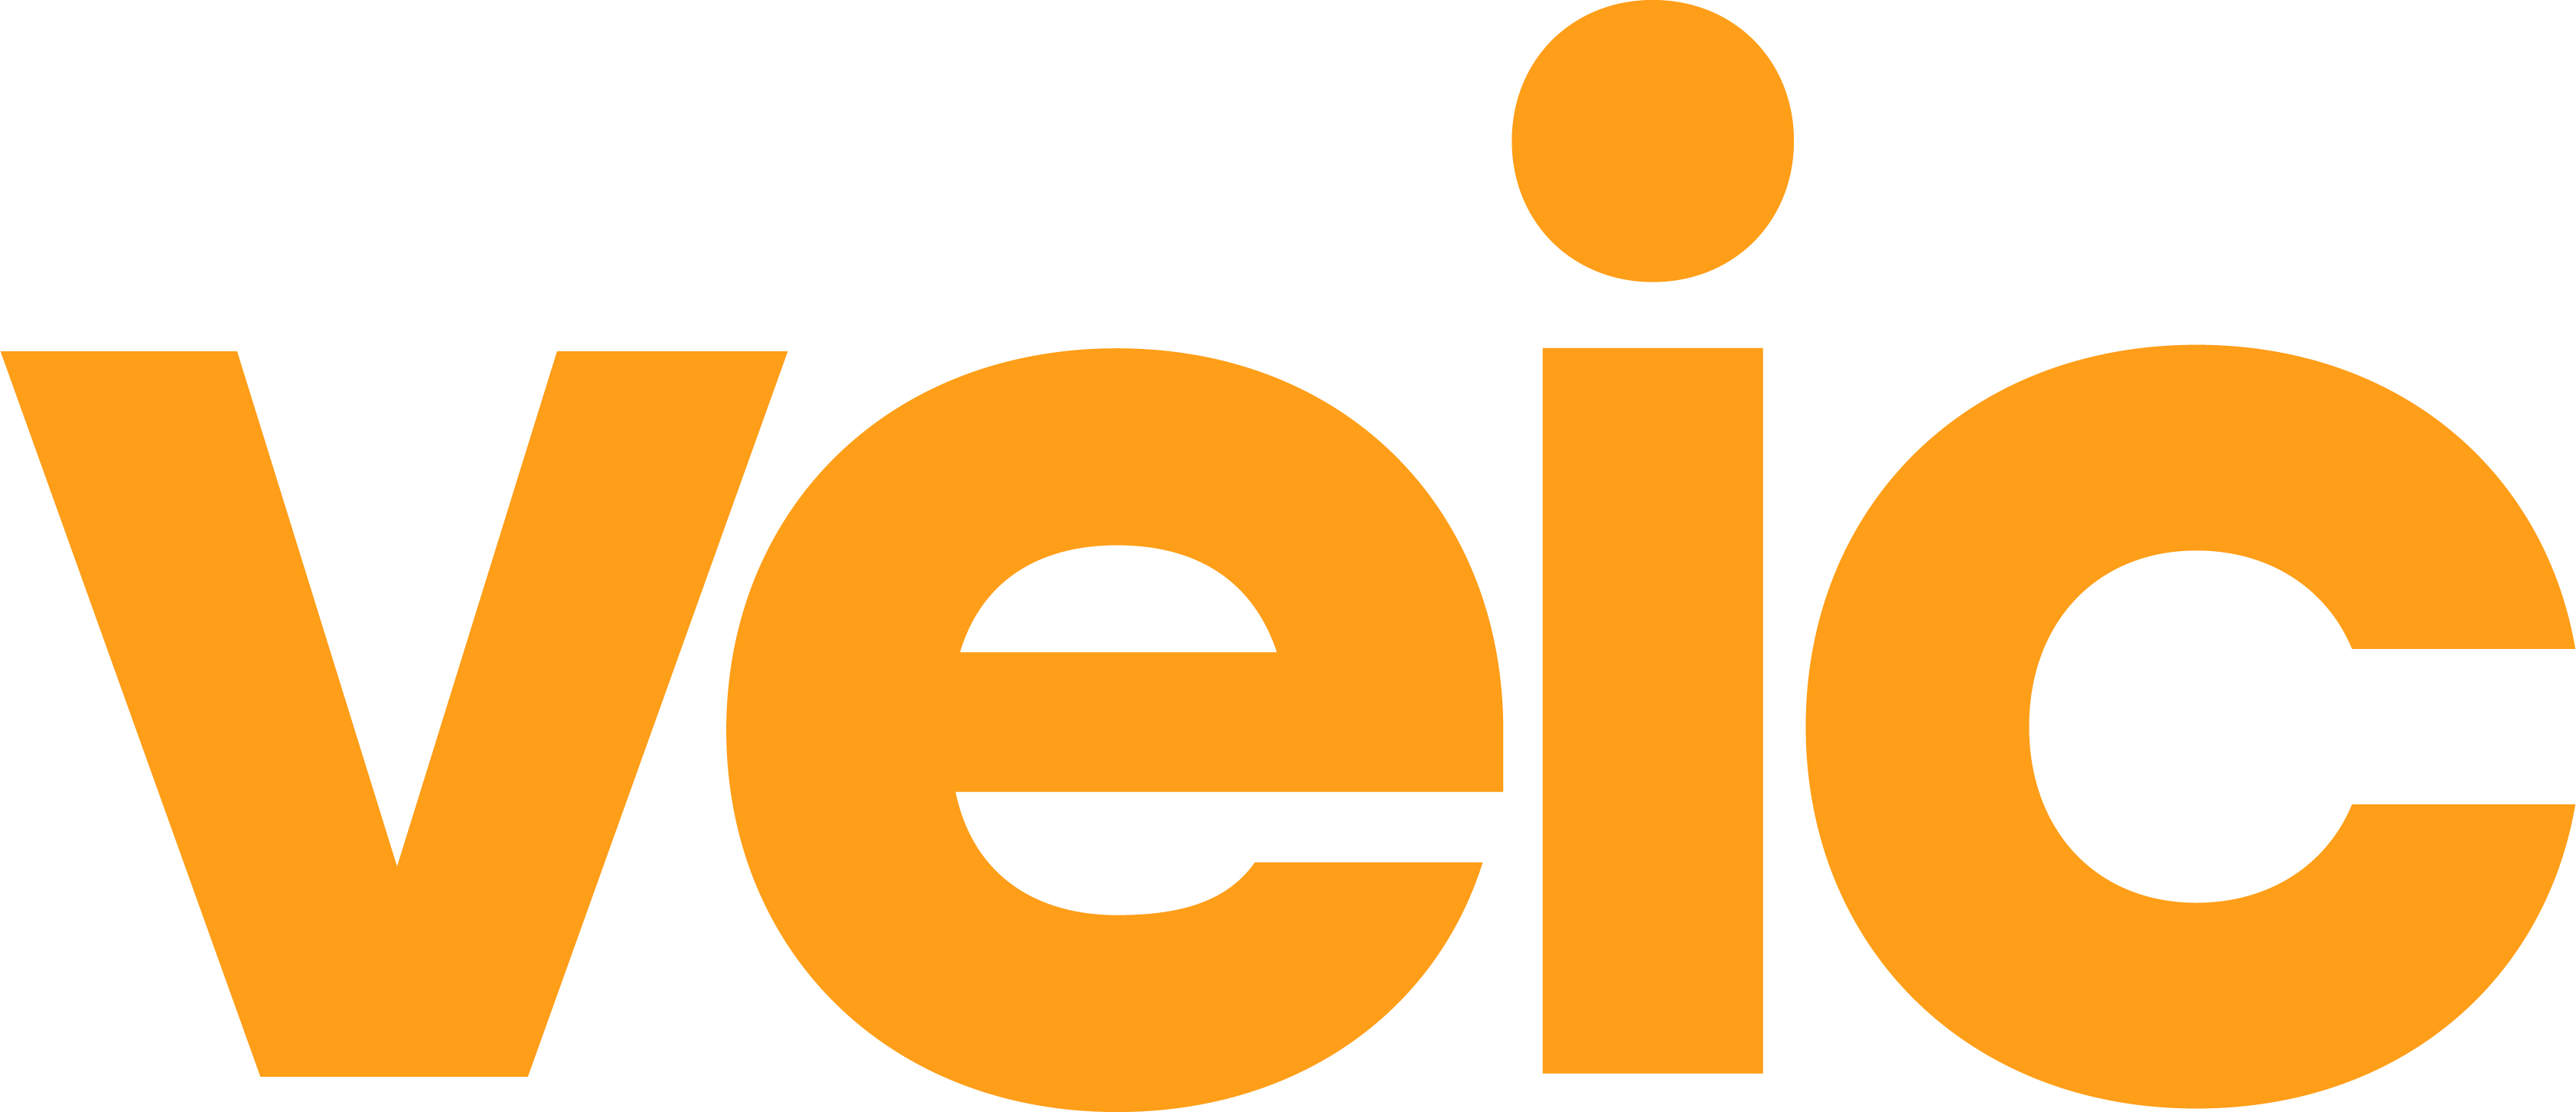 Orange VEIC logo